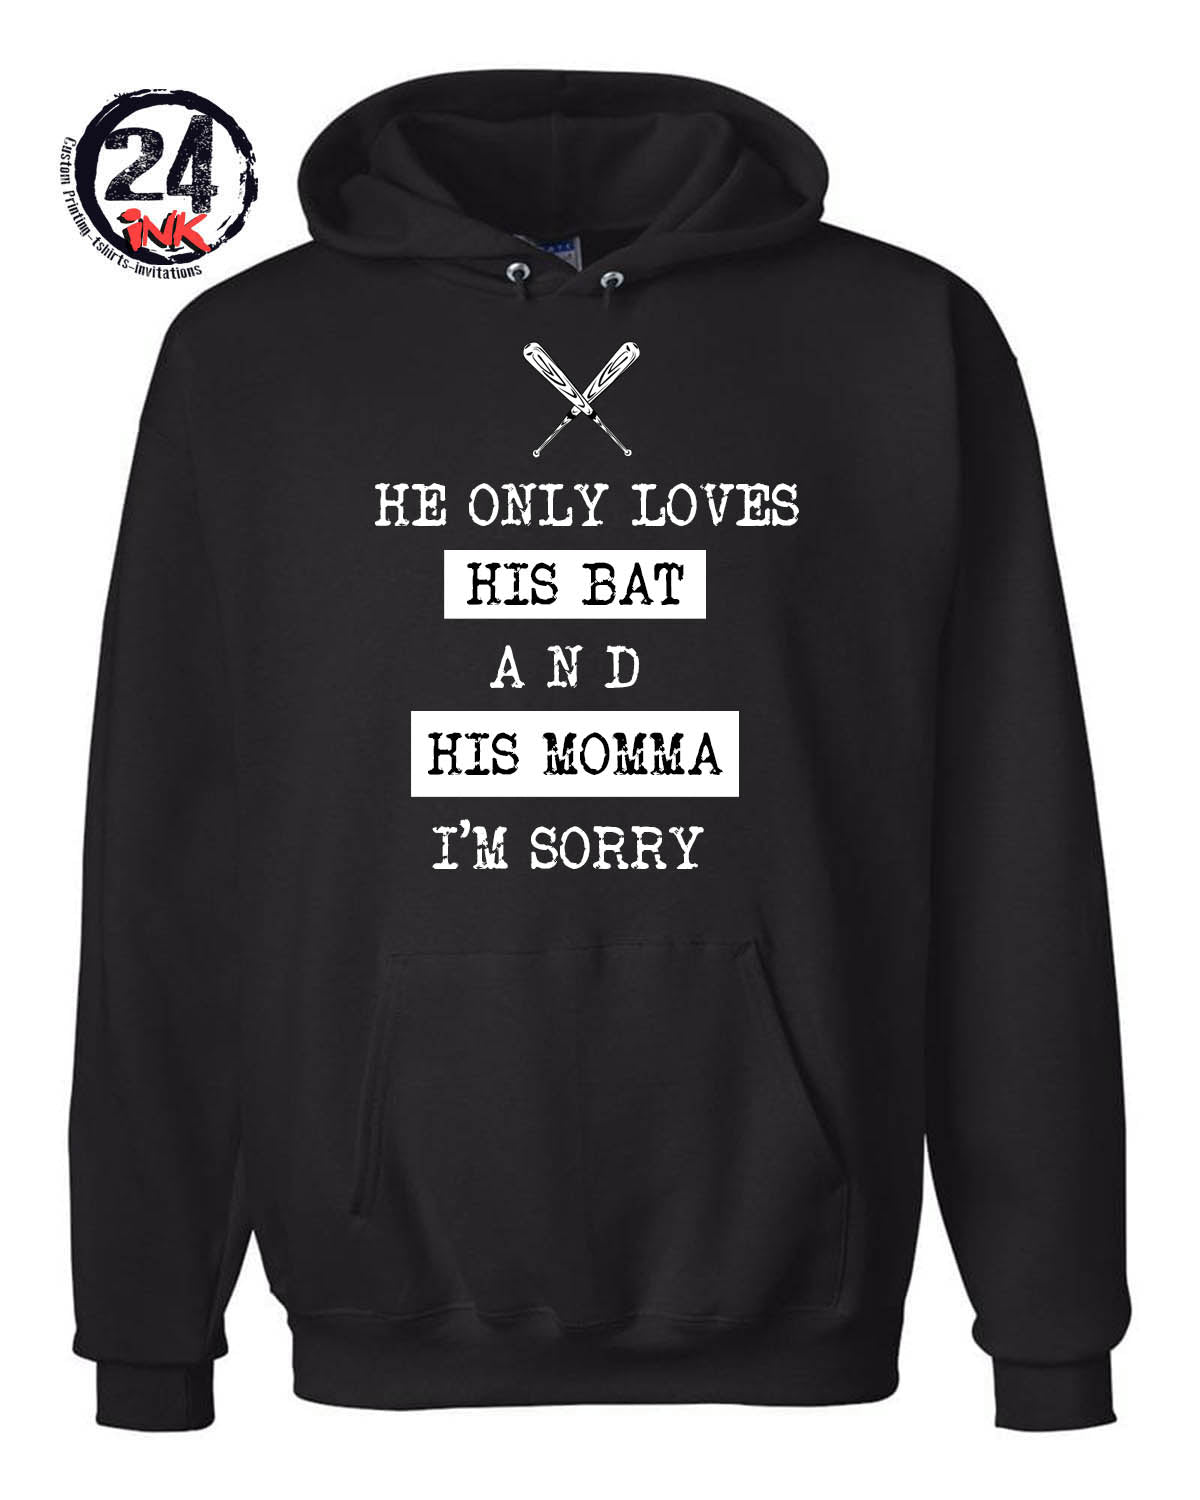 Bat and momma Hooded Sweatshirt